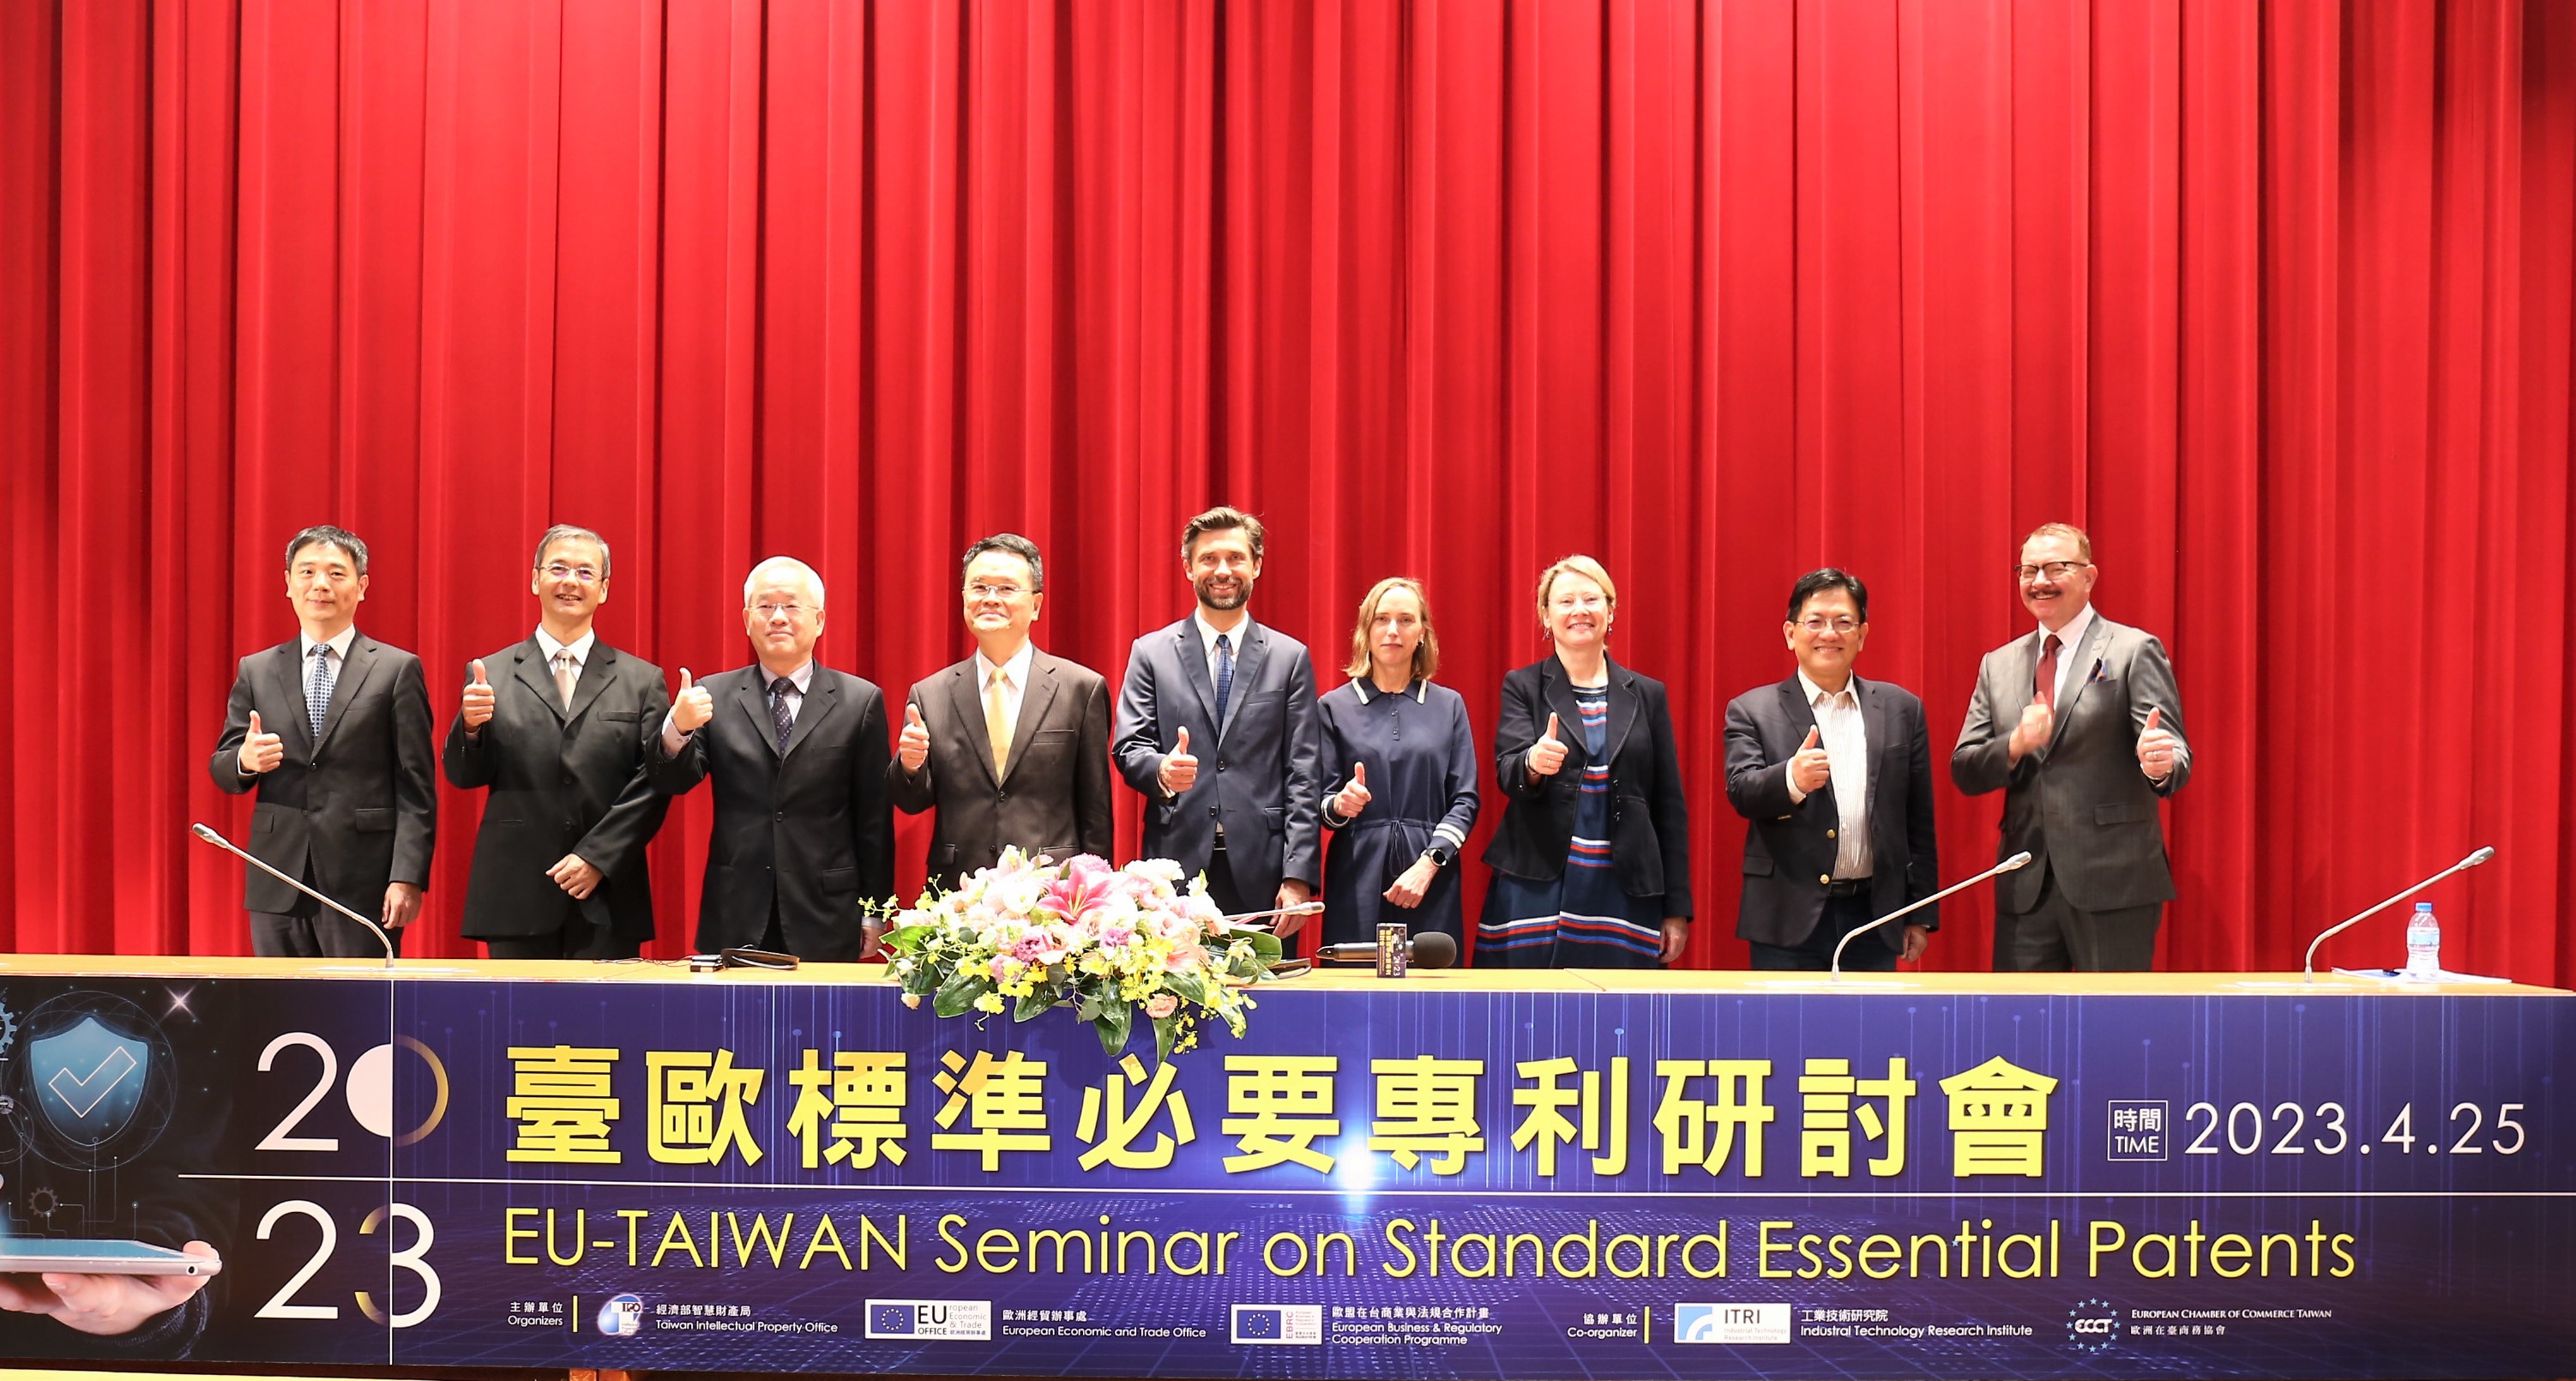 The 2023 EU-Taiwan Seminar on Standard Essential Patents